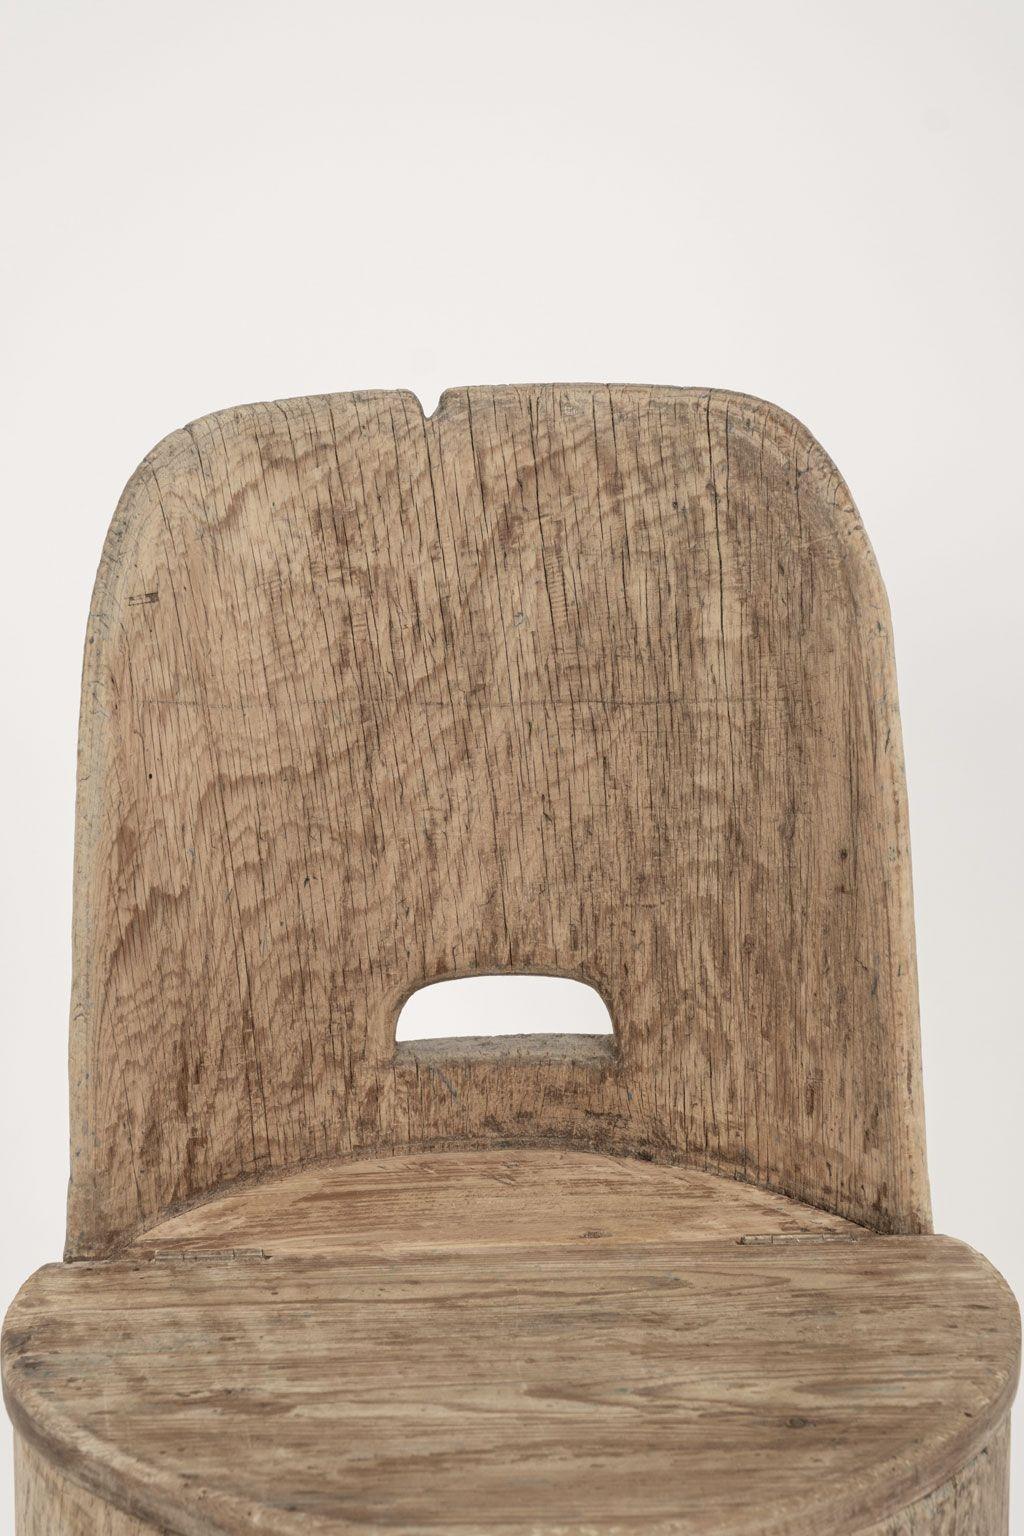 Primitive Swedish Pine Log Chair or Kubbestol For Sale 3